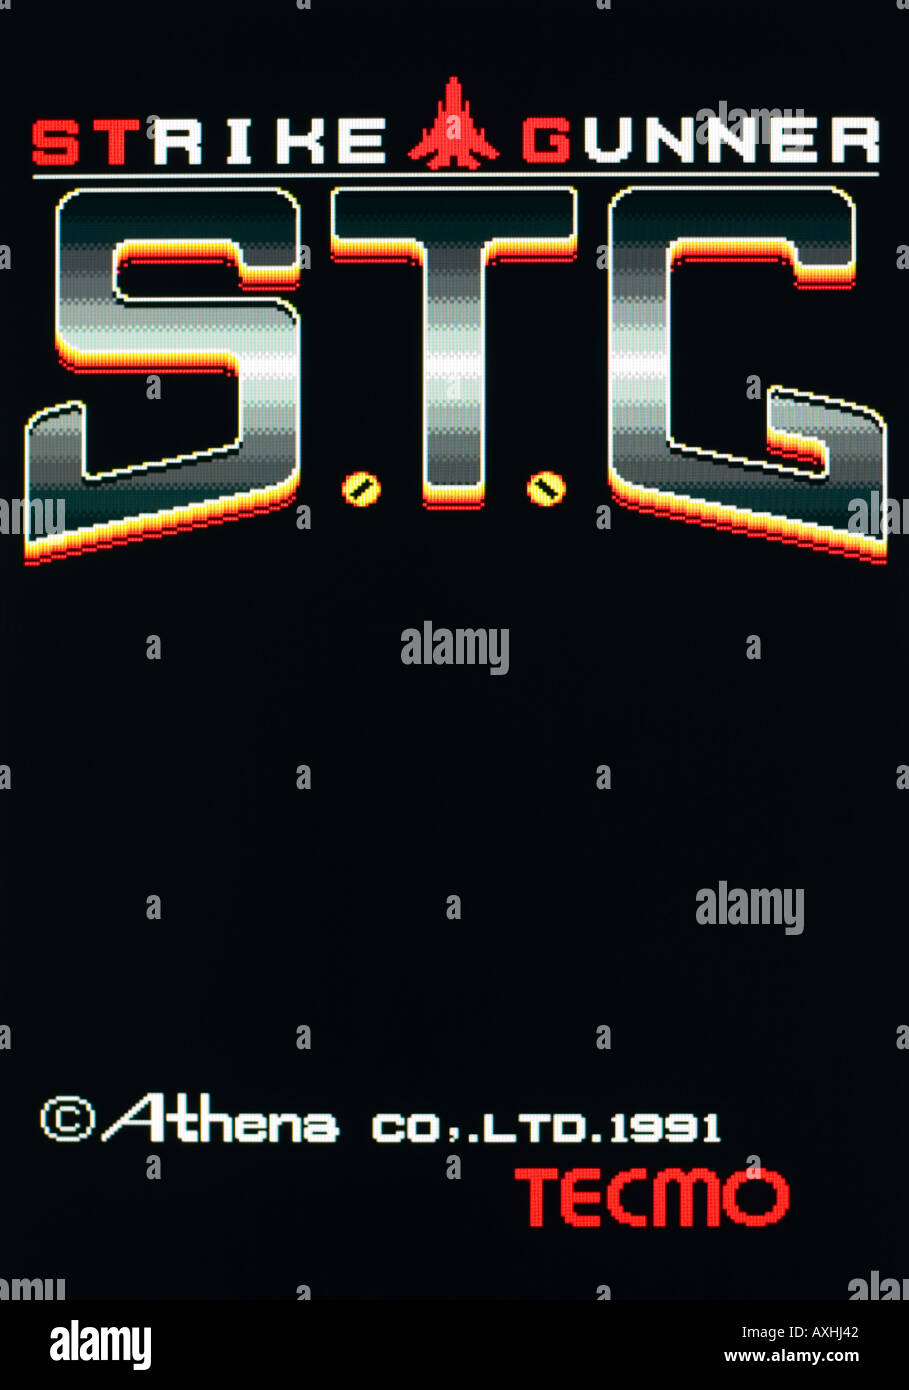 Huelga Gunner S T G STG Athena Co Ltd Tecmo 1991 Vintage videojuego arcade captura de pantalla - SÓLO PARA USO EDITORIAL Foto de stock